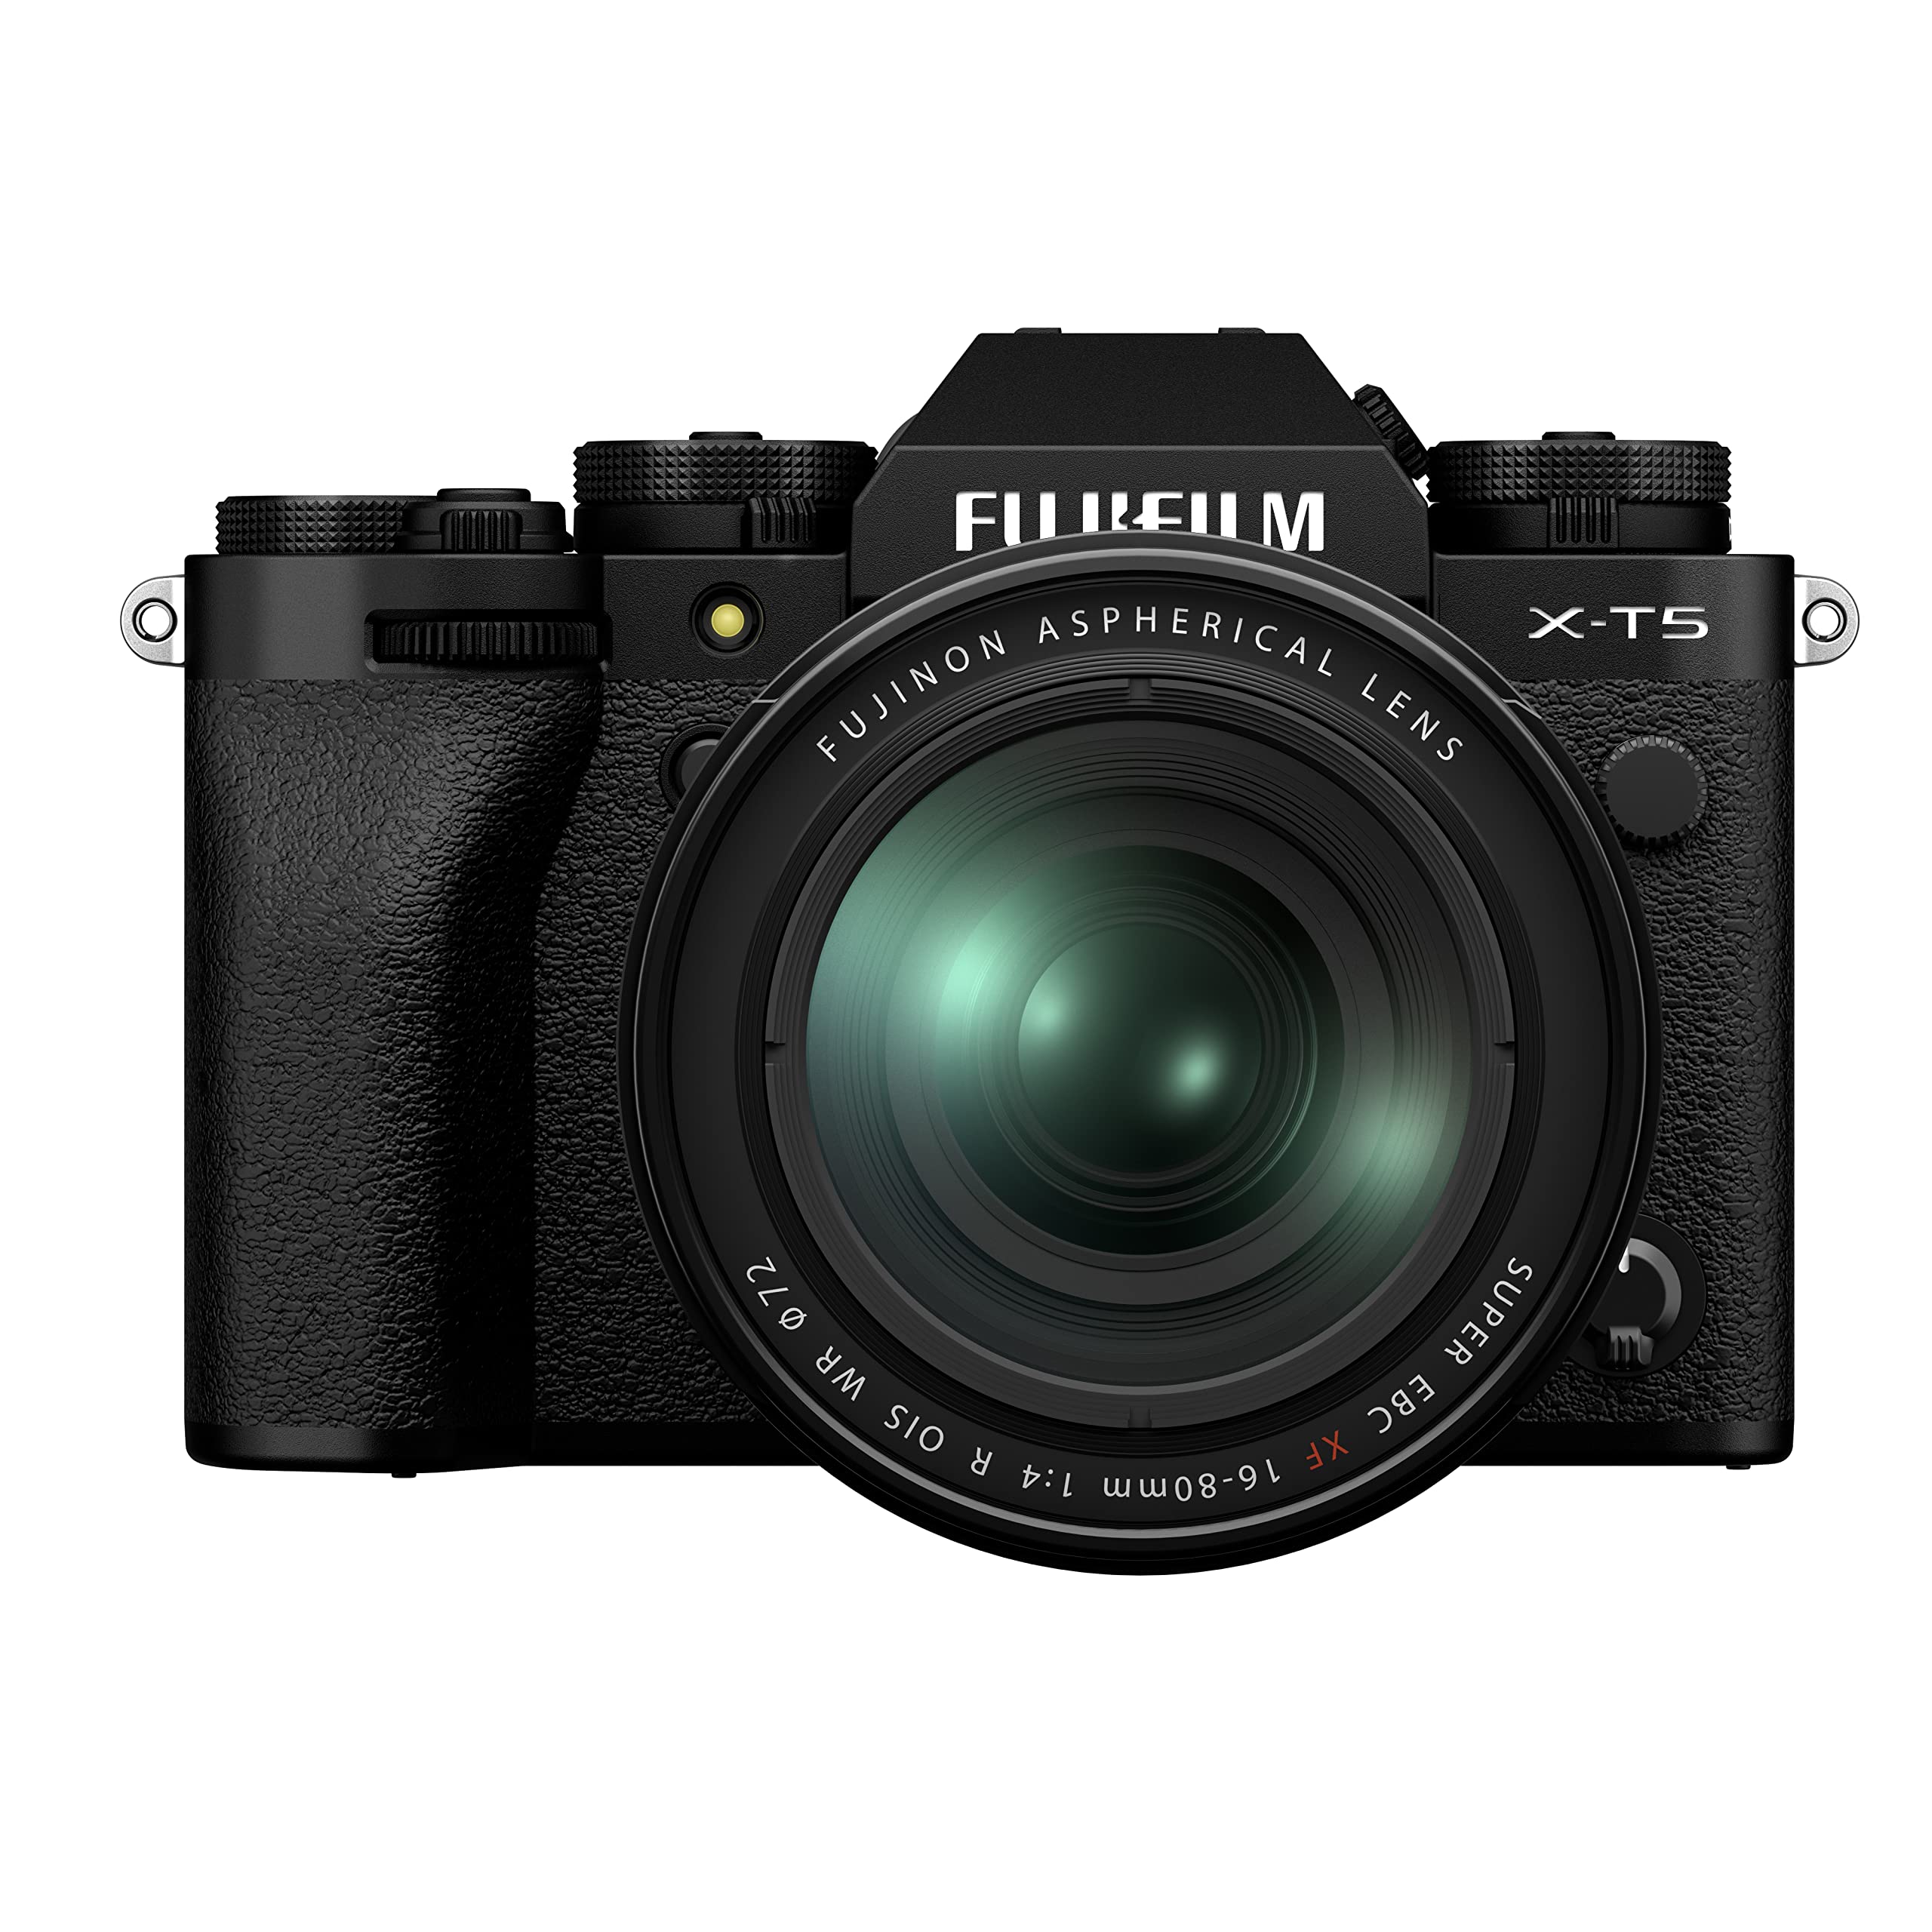 Fujifilm X-T5 Mirrorless Digital Camera XF16-80mm Lens Kit - Black - $1,699 at Amazon (backordered but available again) $1699.99